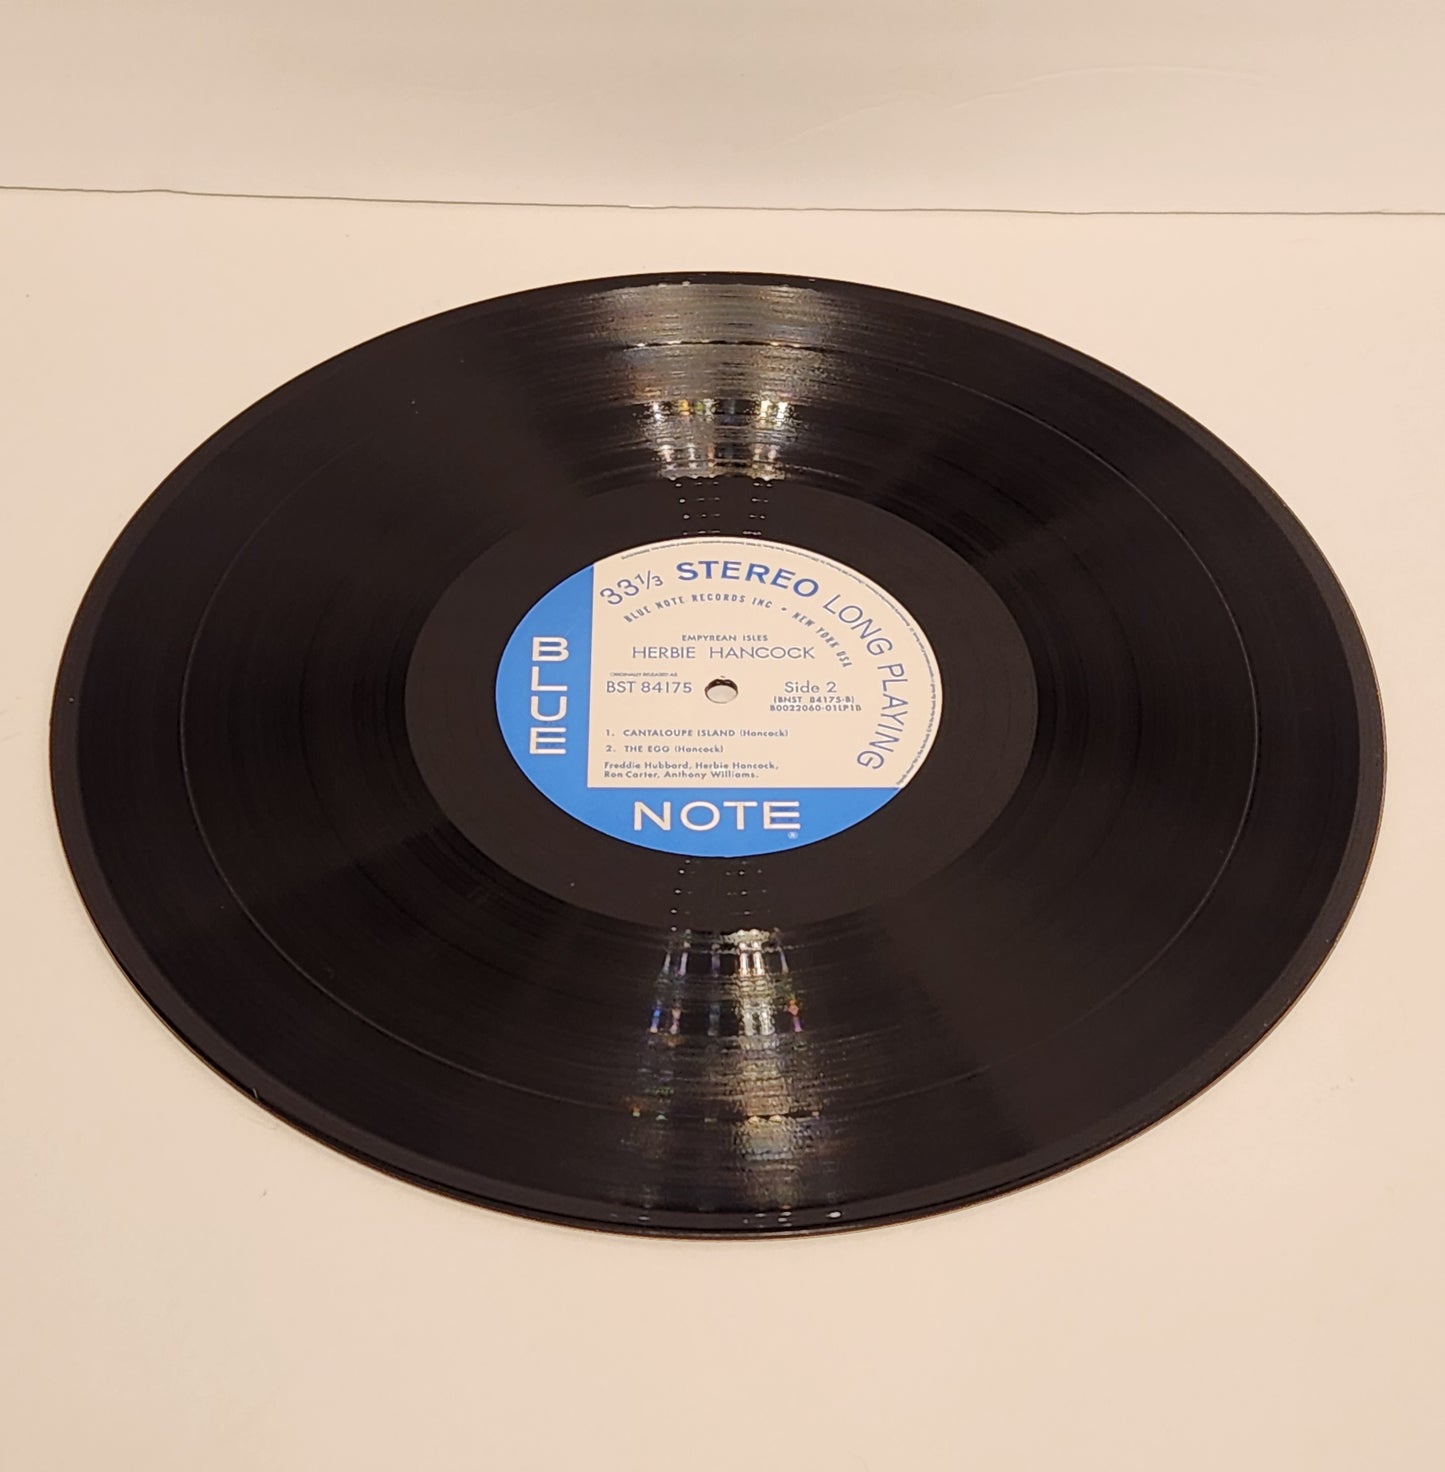 Herbie Hancock "Empyrean Isles" Jazz 2015 Limited Edition Blue Note Reissue Album